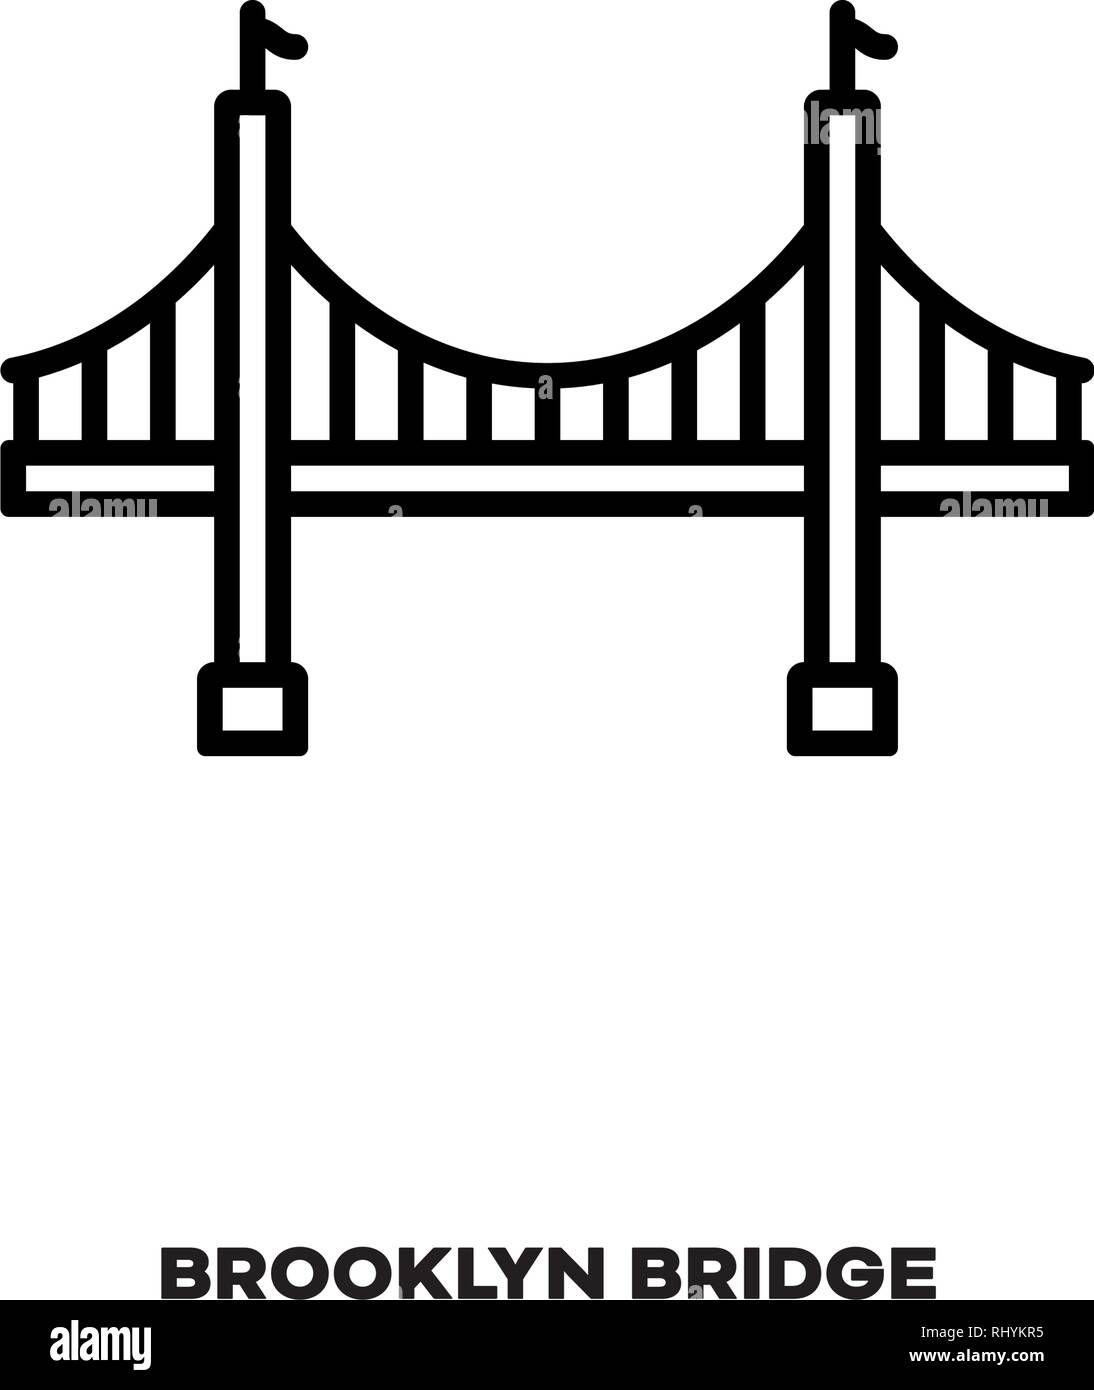 Brooklyn Bridge At New York City, United States of America, vector line icon. International landmark and tourism symbol. Stock Vector